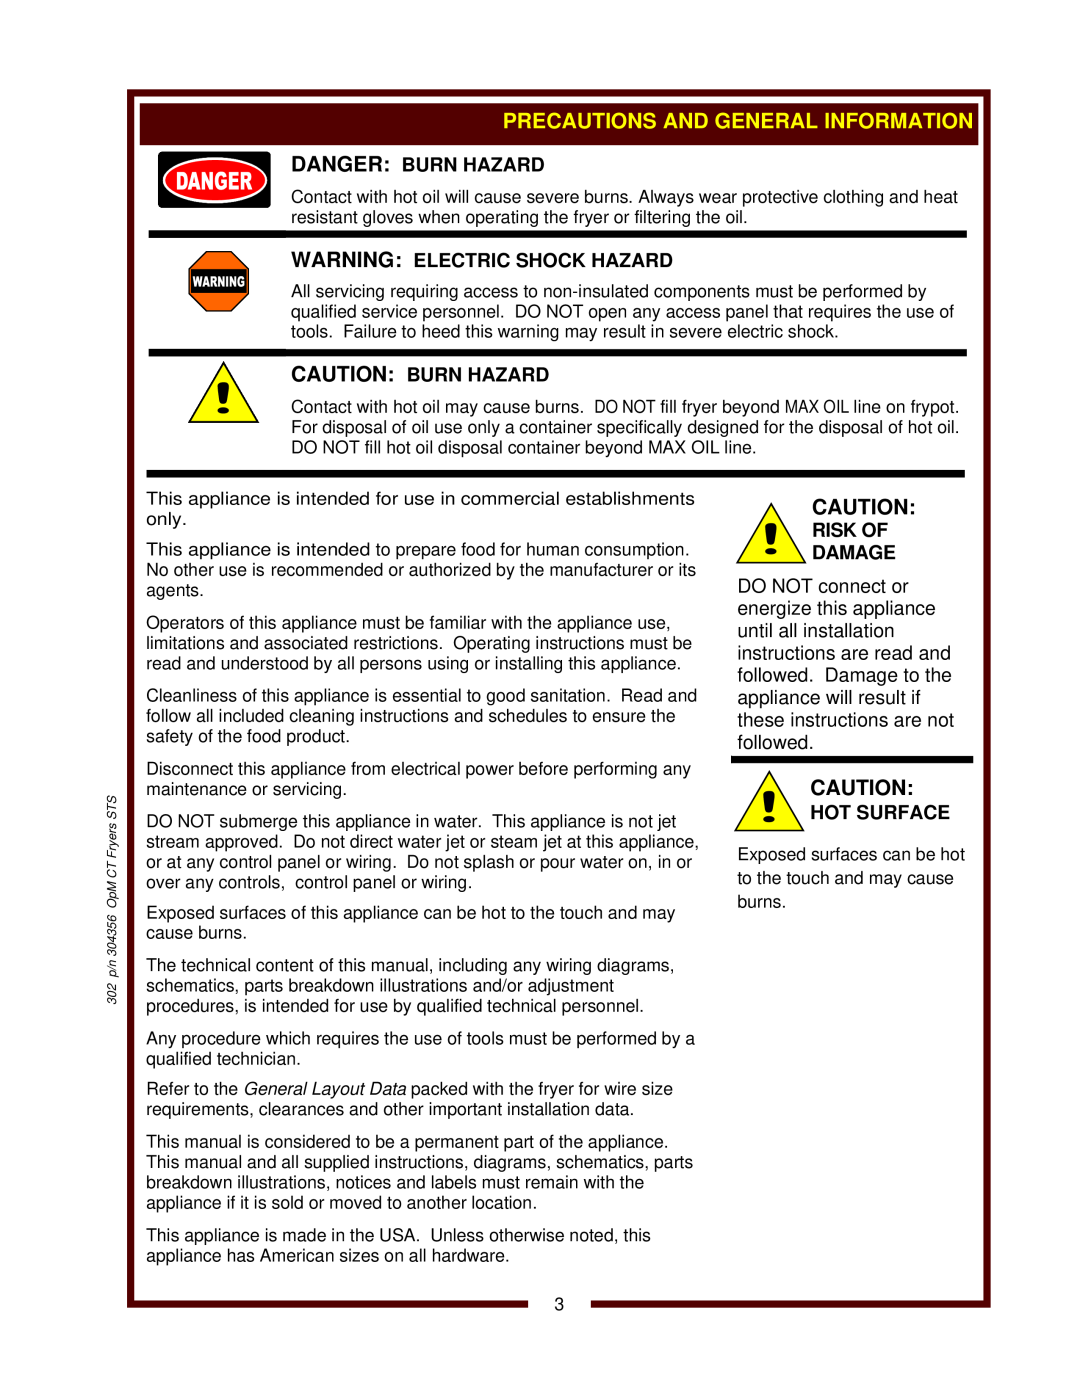 Wells F-101 Precautions And General Information, Danger Burn Hazard, Warning Electric Shock Hazard, Caution Burn Hazard 